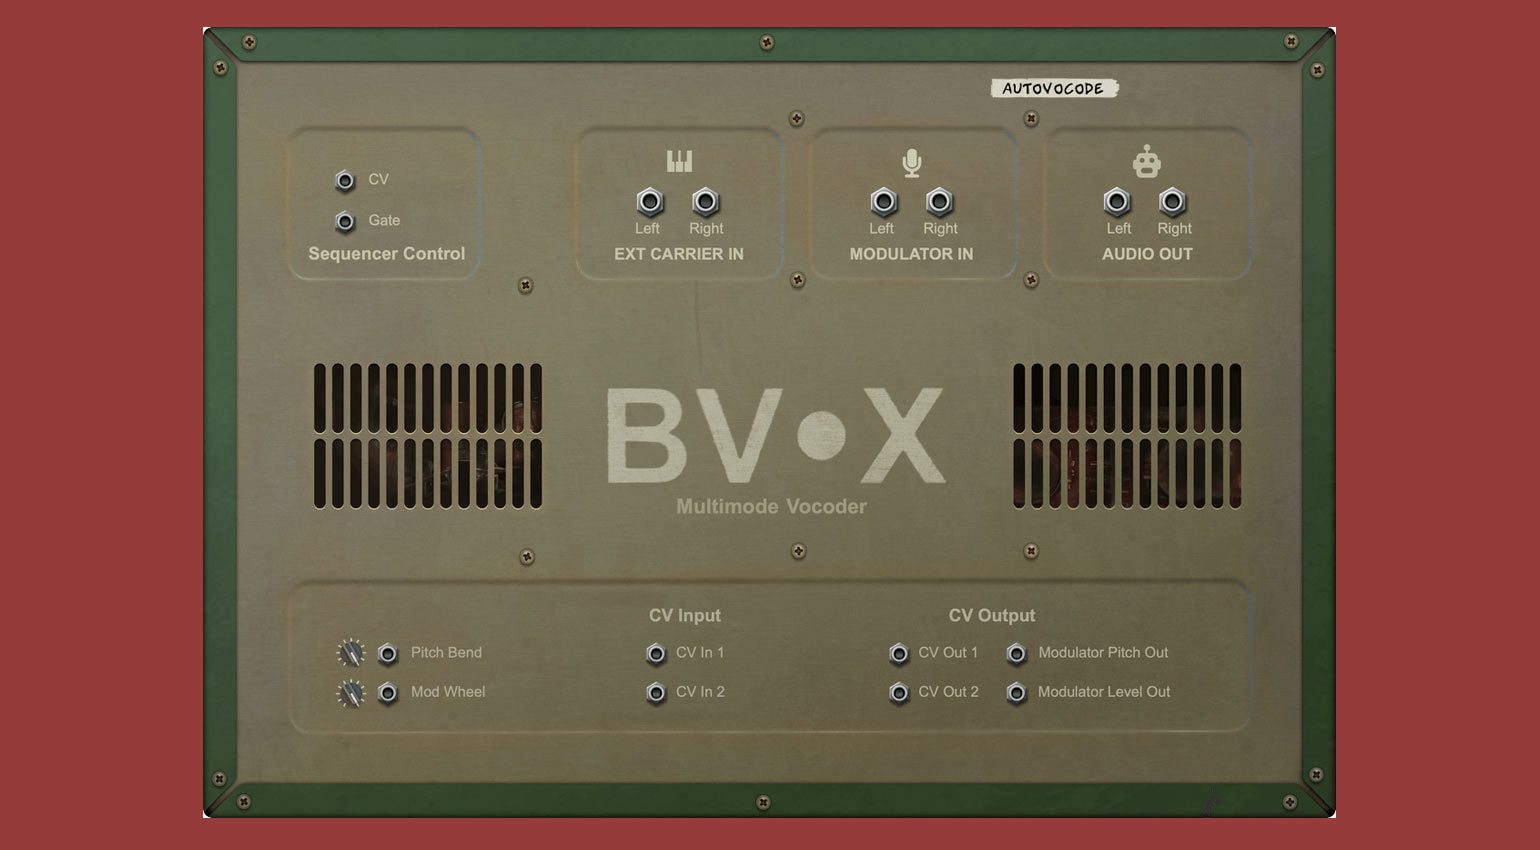 Reason Studios BV-X Multimode Vocoder